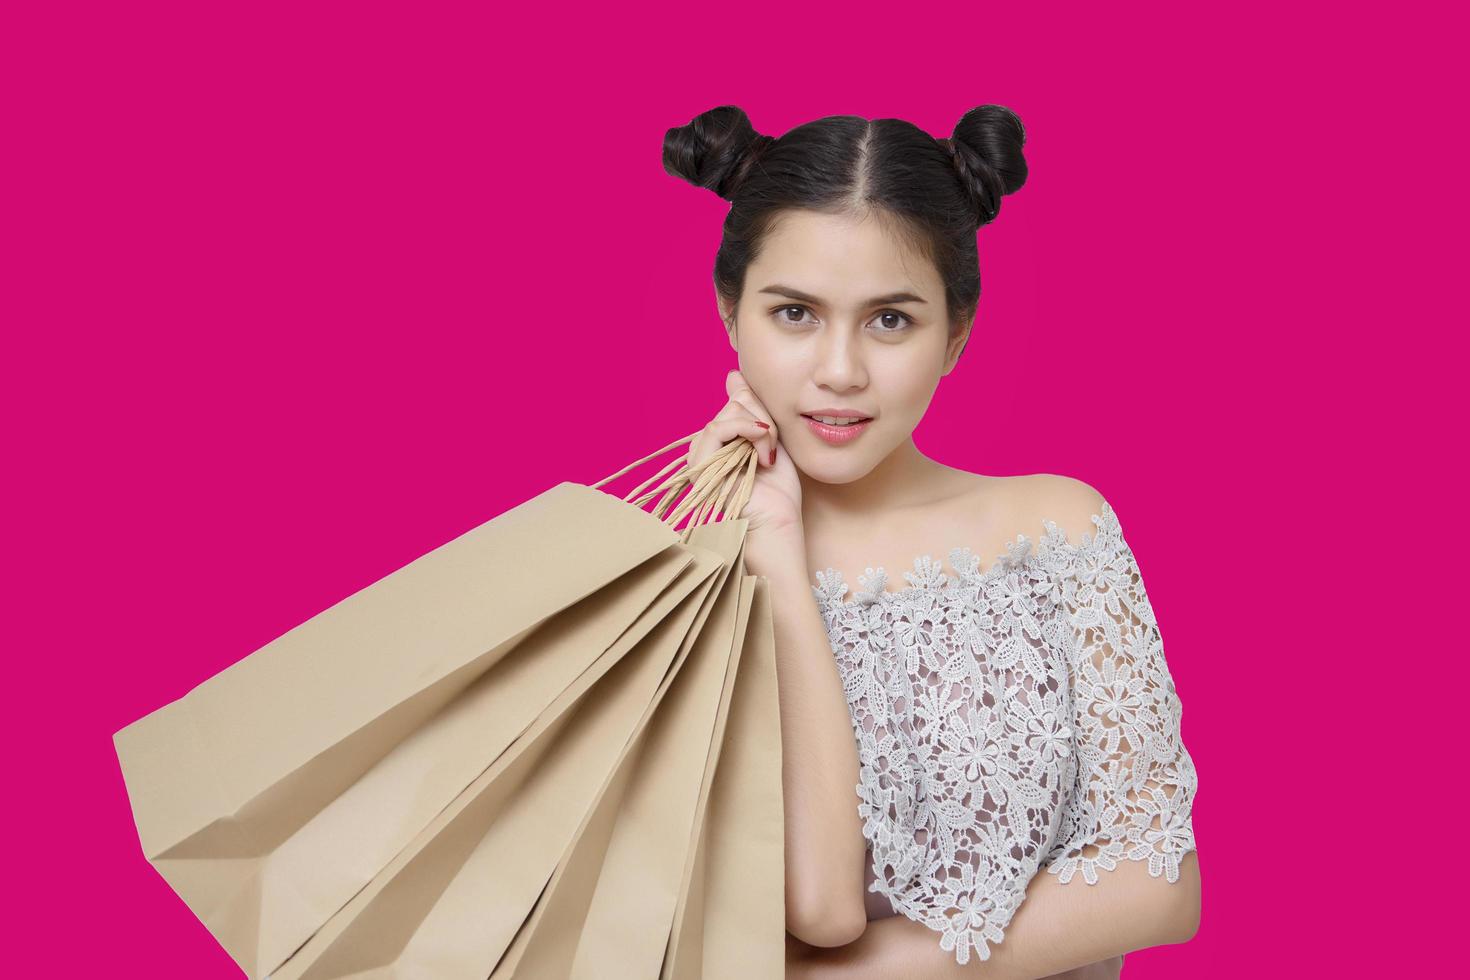 attraktiv shopparkvinna som håller shoppingpåsar på rosa bakgrund foto